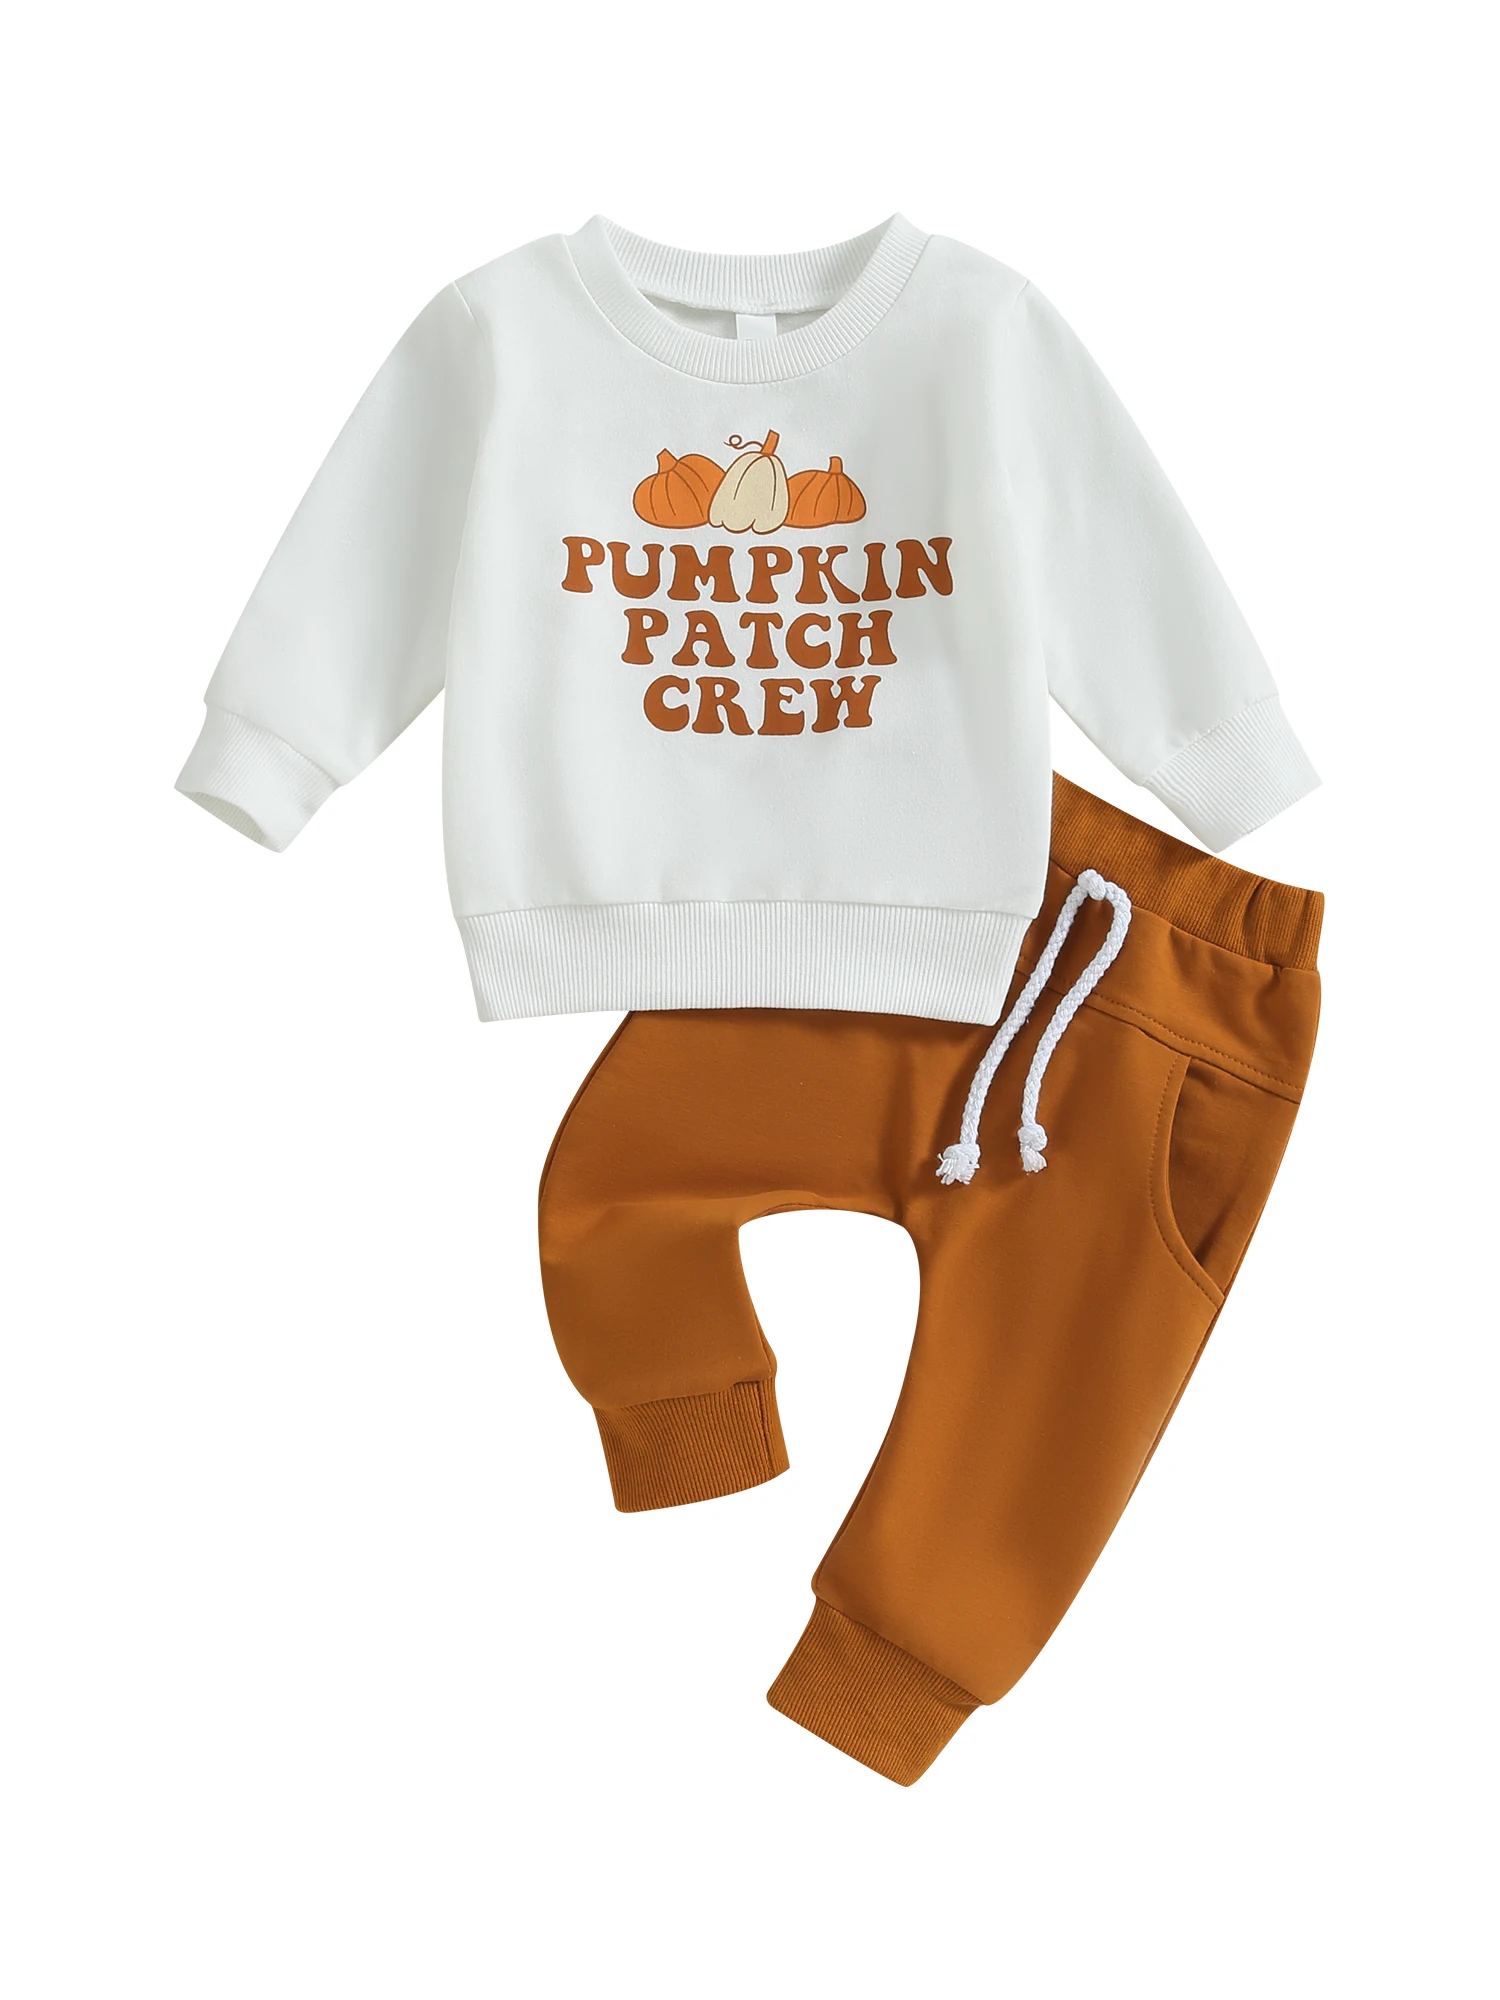 

Cute Halloween Costume for Newborns Adorable Pumpkin Print Sweatshirt and Elastic Pants Set for Infants - 2 Piece Outfit